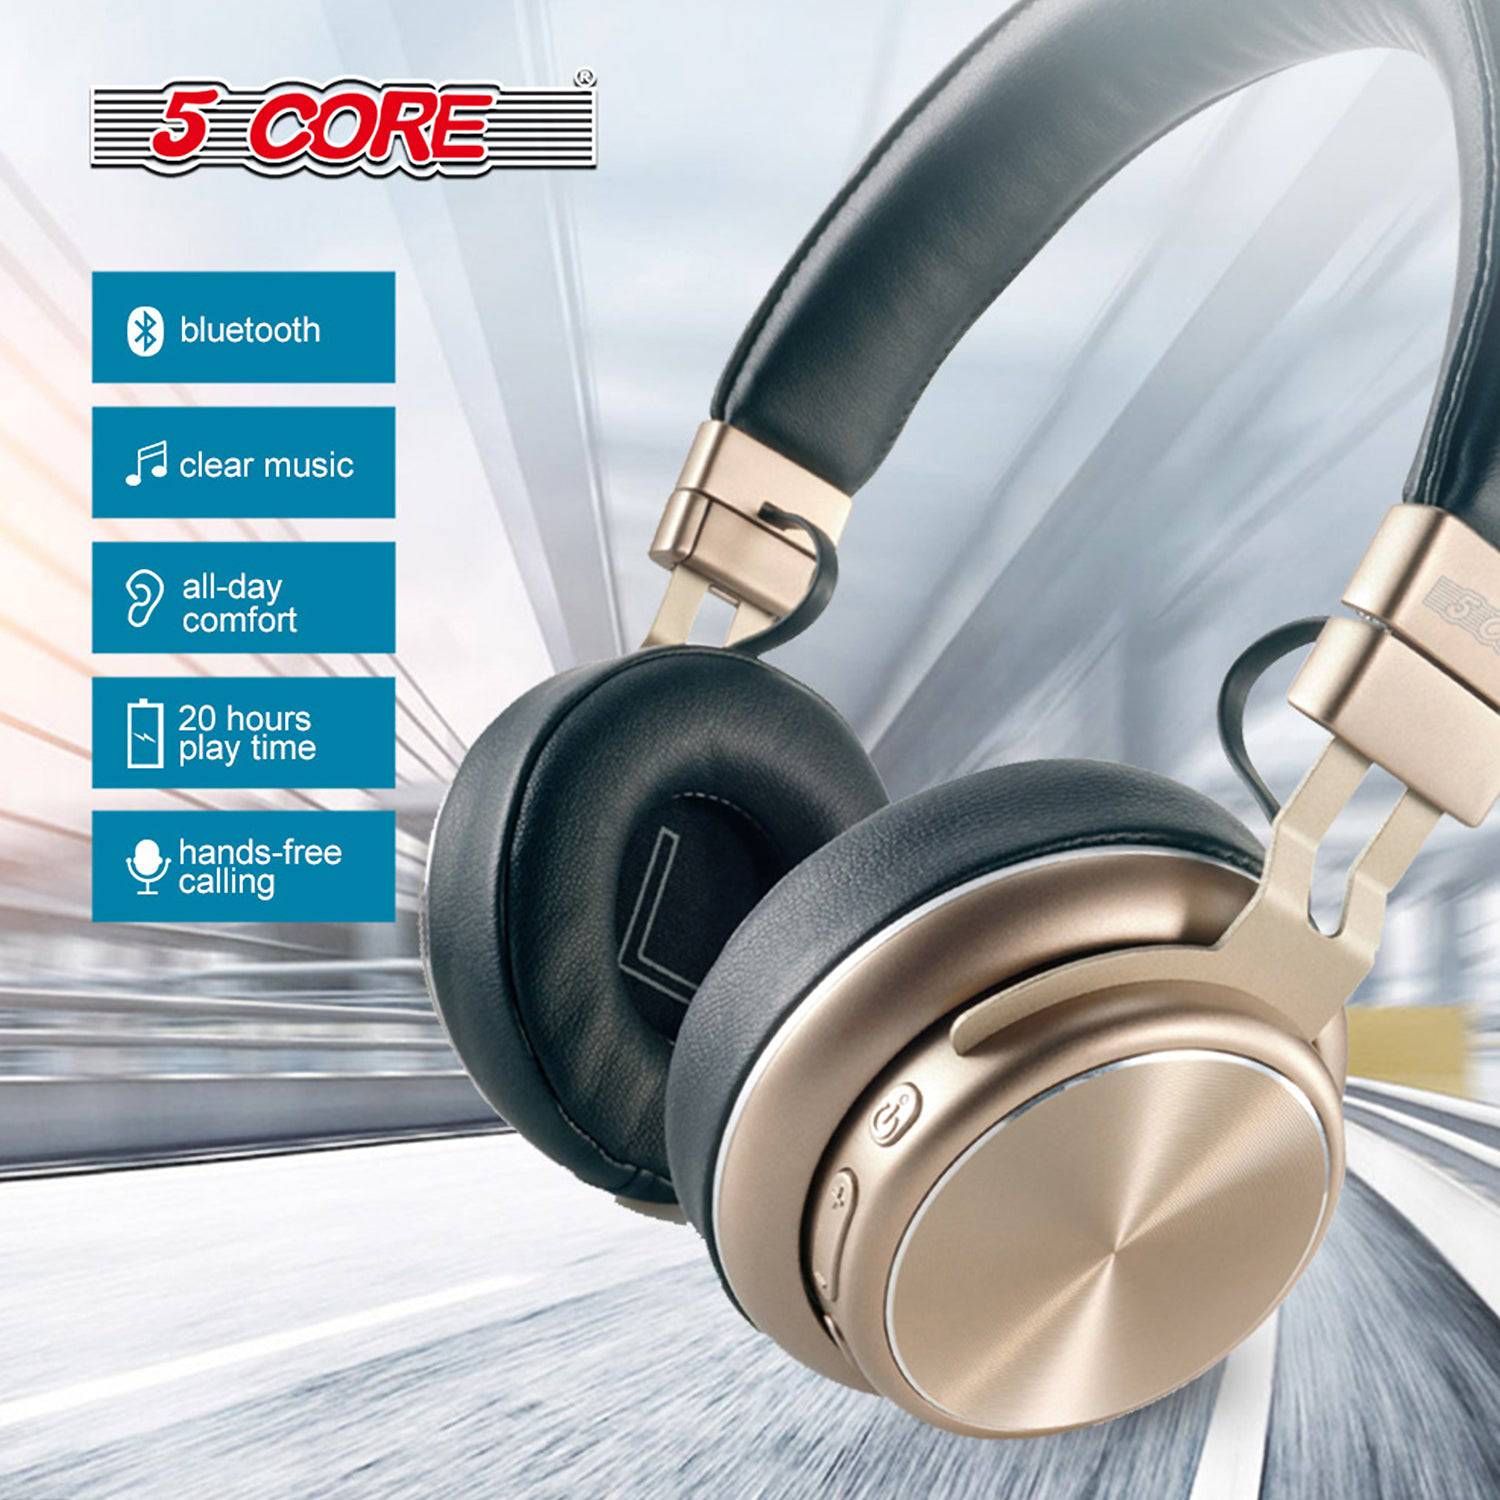 5Core 5Core Premium Headphone inbuilt Mic Over Ear Wireless Headset  Bluetooth 5.0 Gold HEADPHONE 13 G